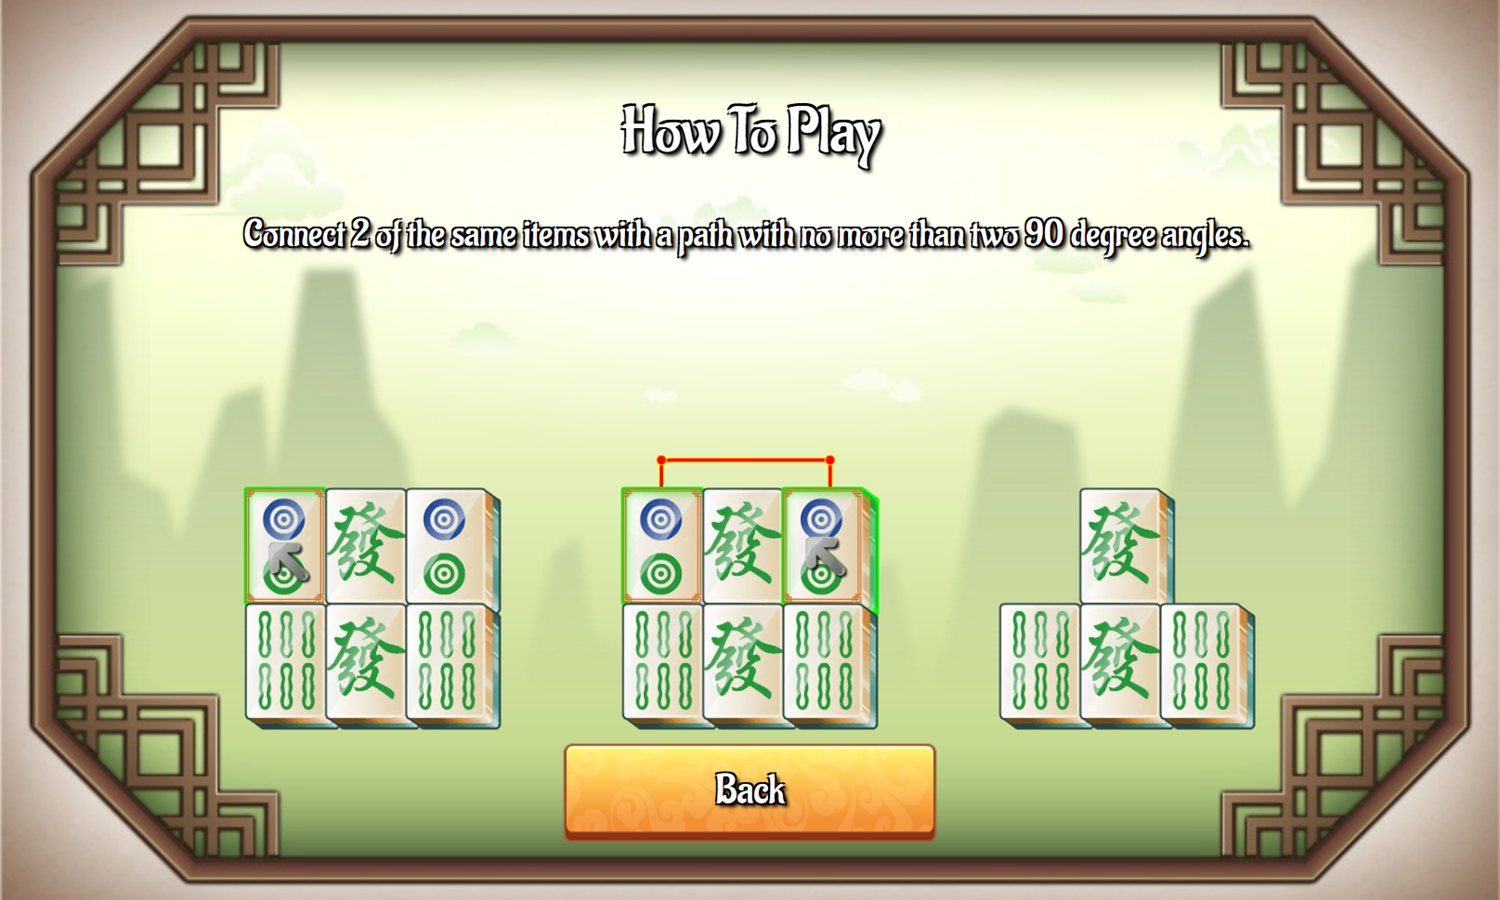 Mahjong Connect Game How To Play Screenshot.